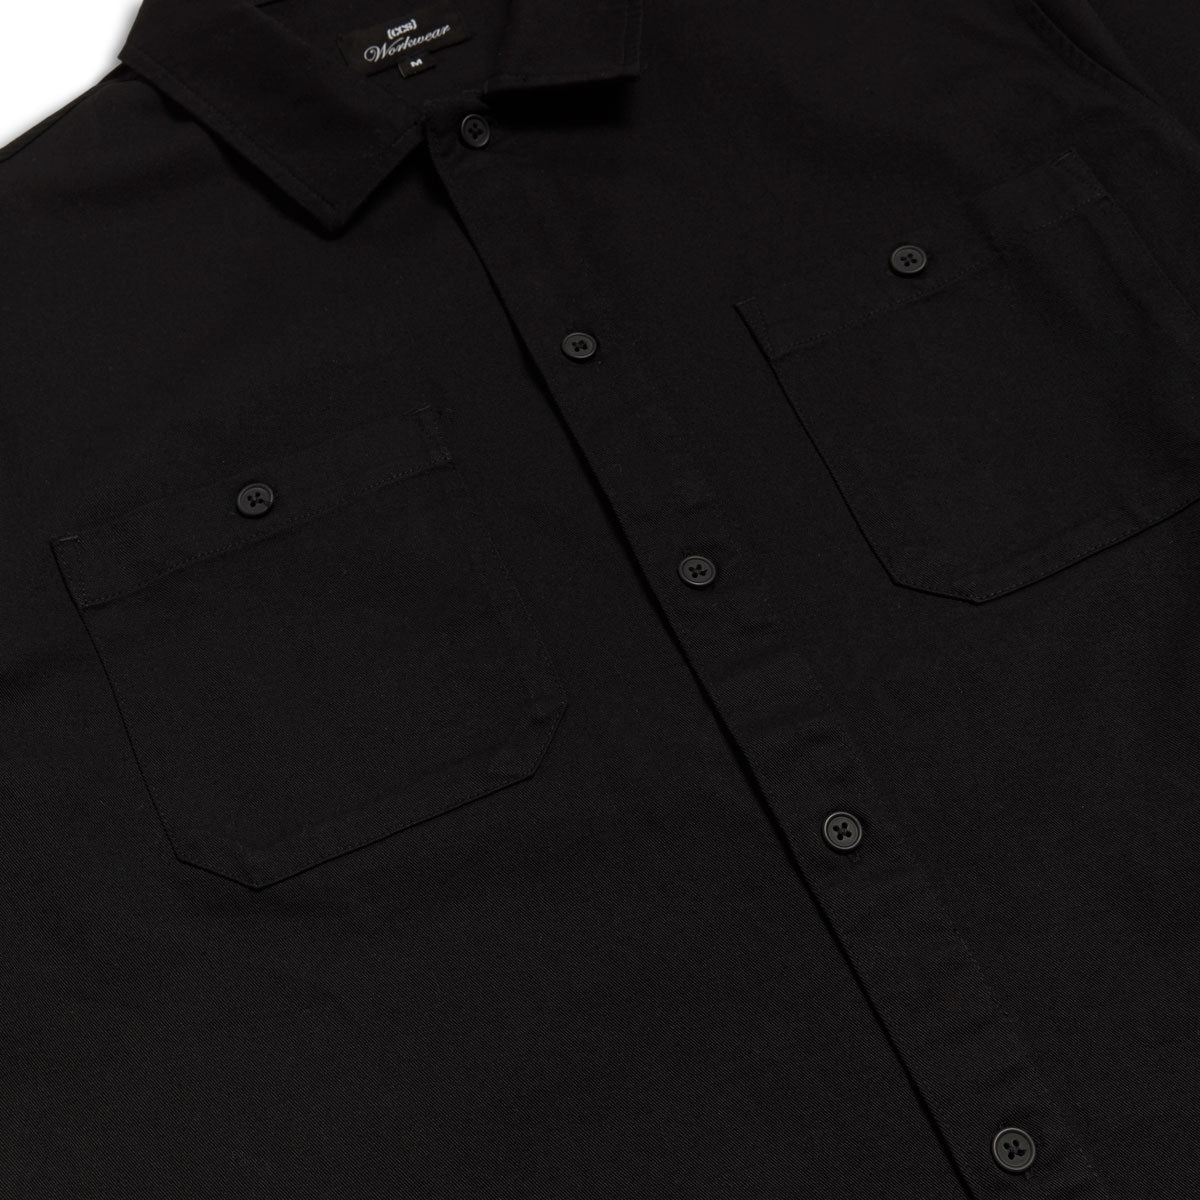 CCS Custom Embroidered Work Shirt - Black image 5